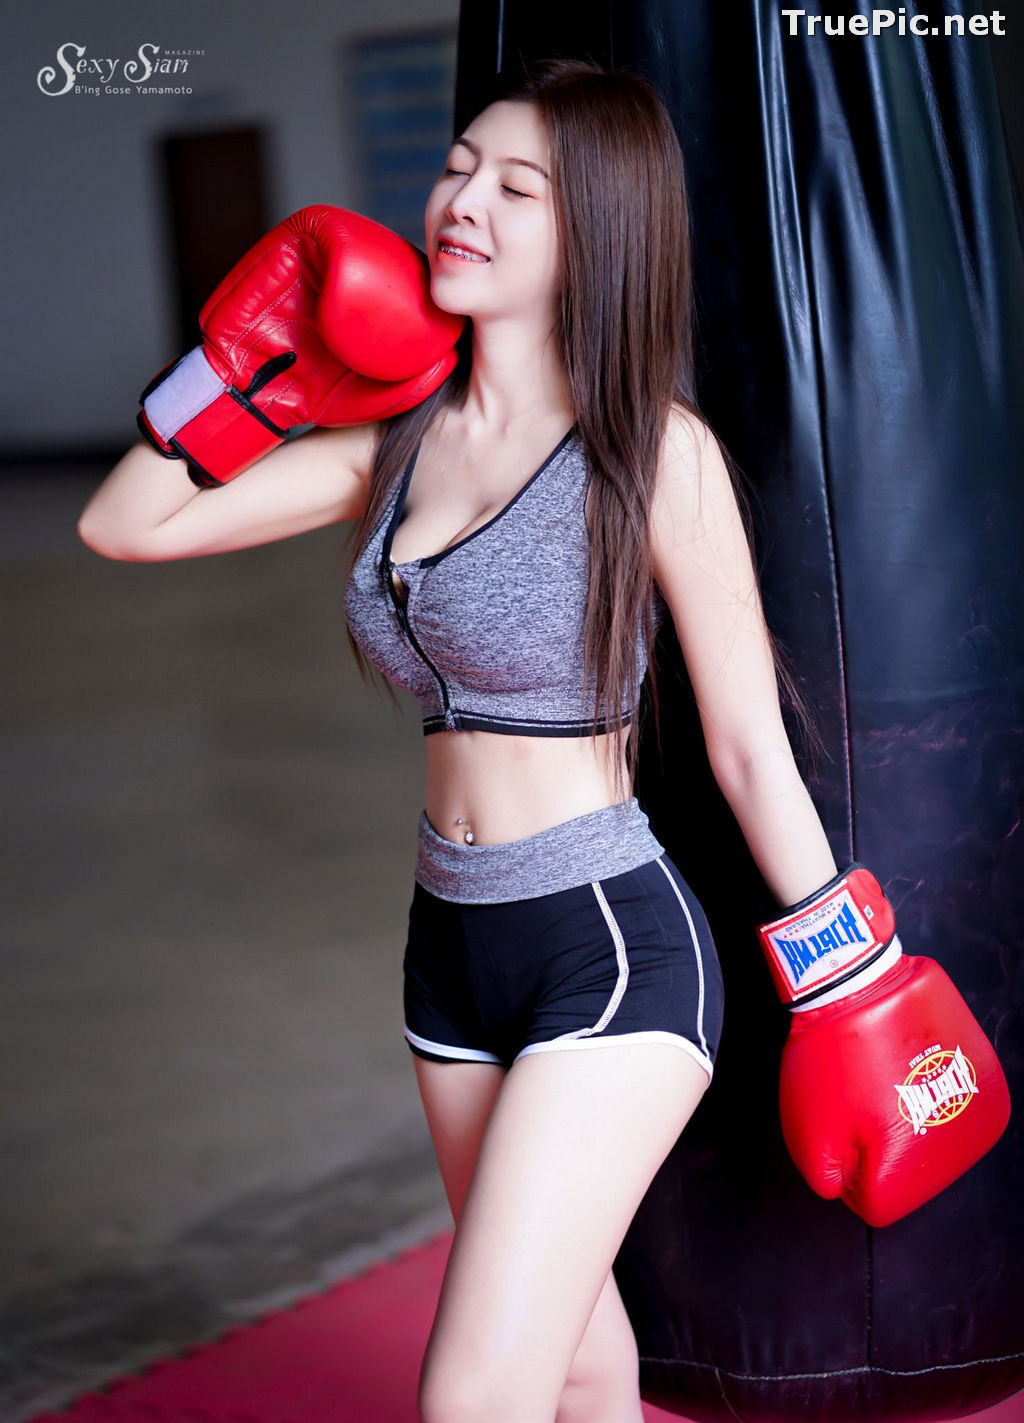 Image Thailand Model - Yotaka Suriya - Sexy Boxing Girl - TruePic.net - Picture-8